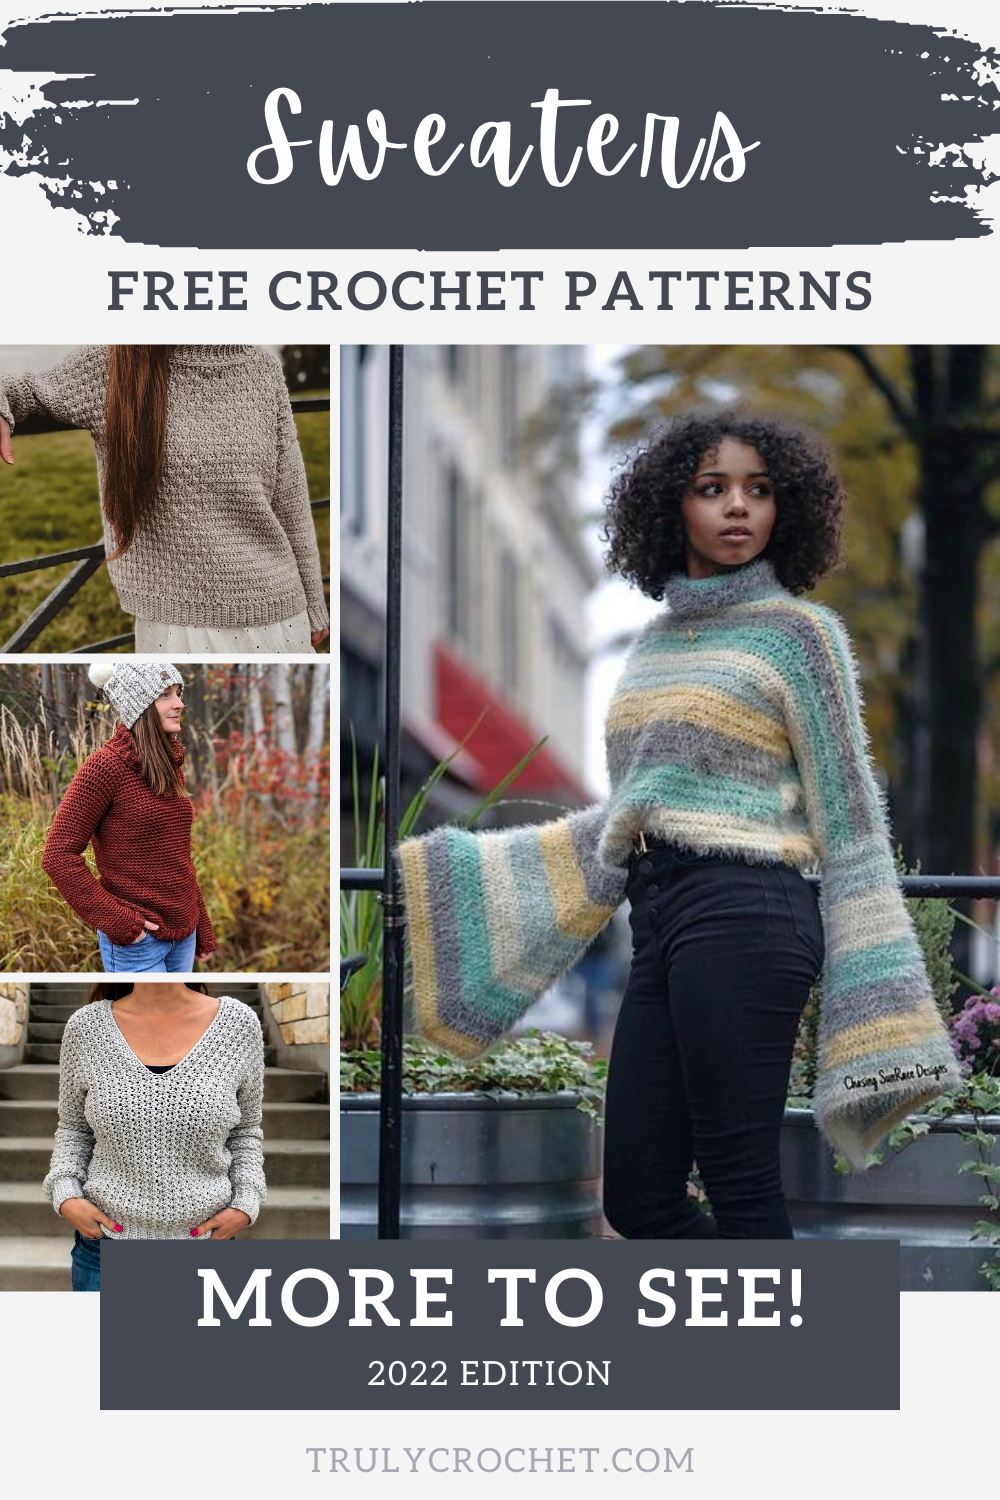 9 Free Crochet Sweater Patterns - 2022